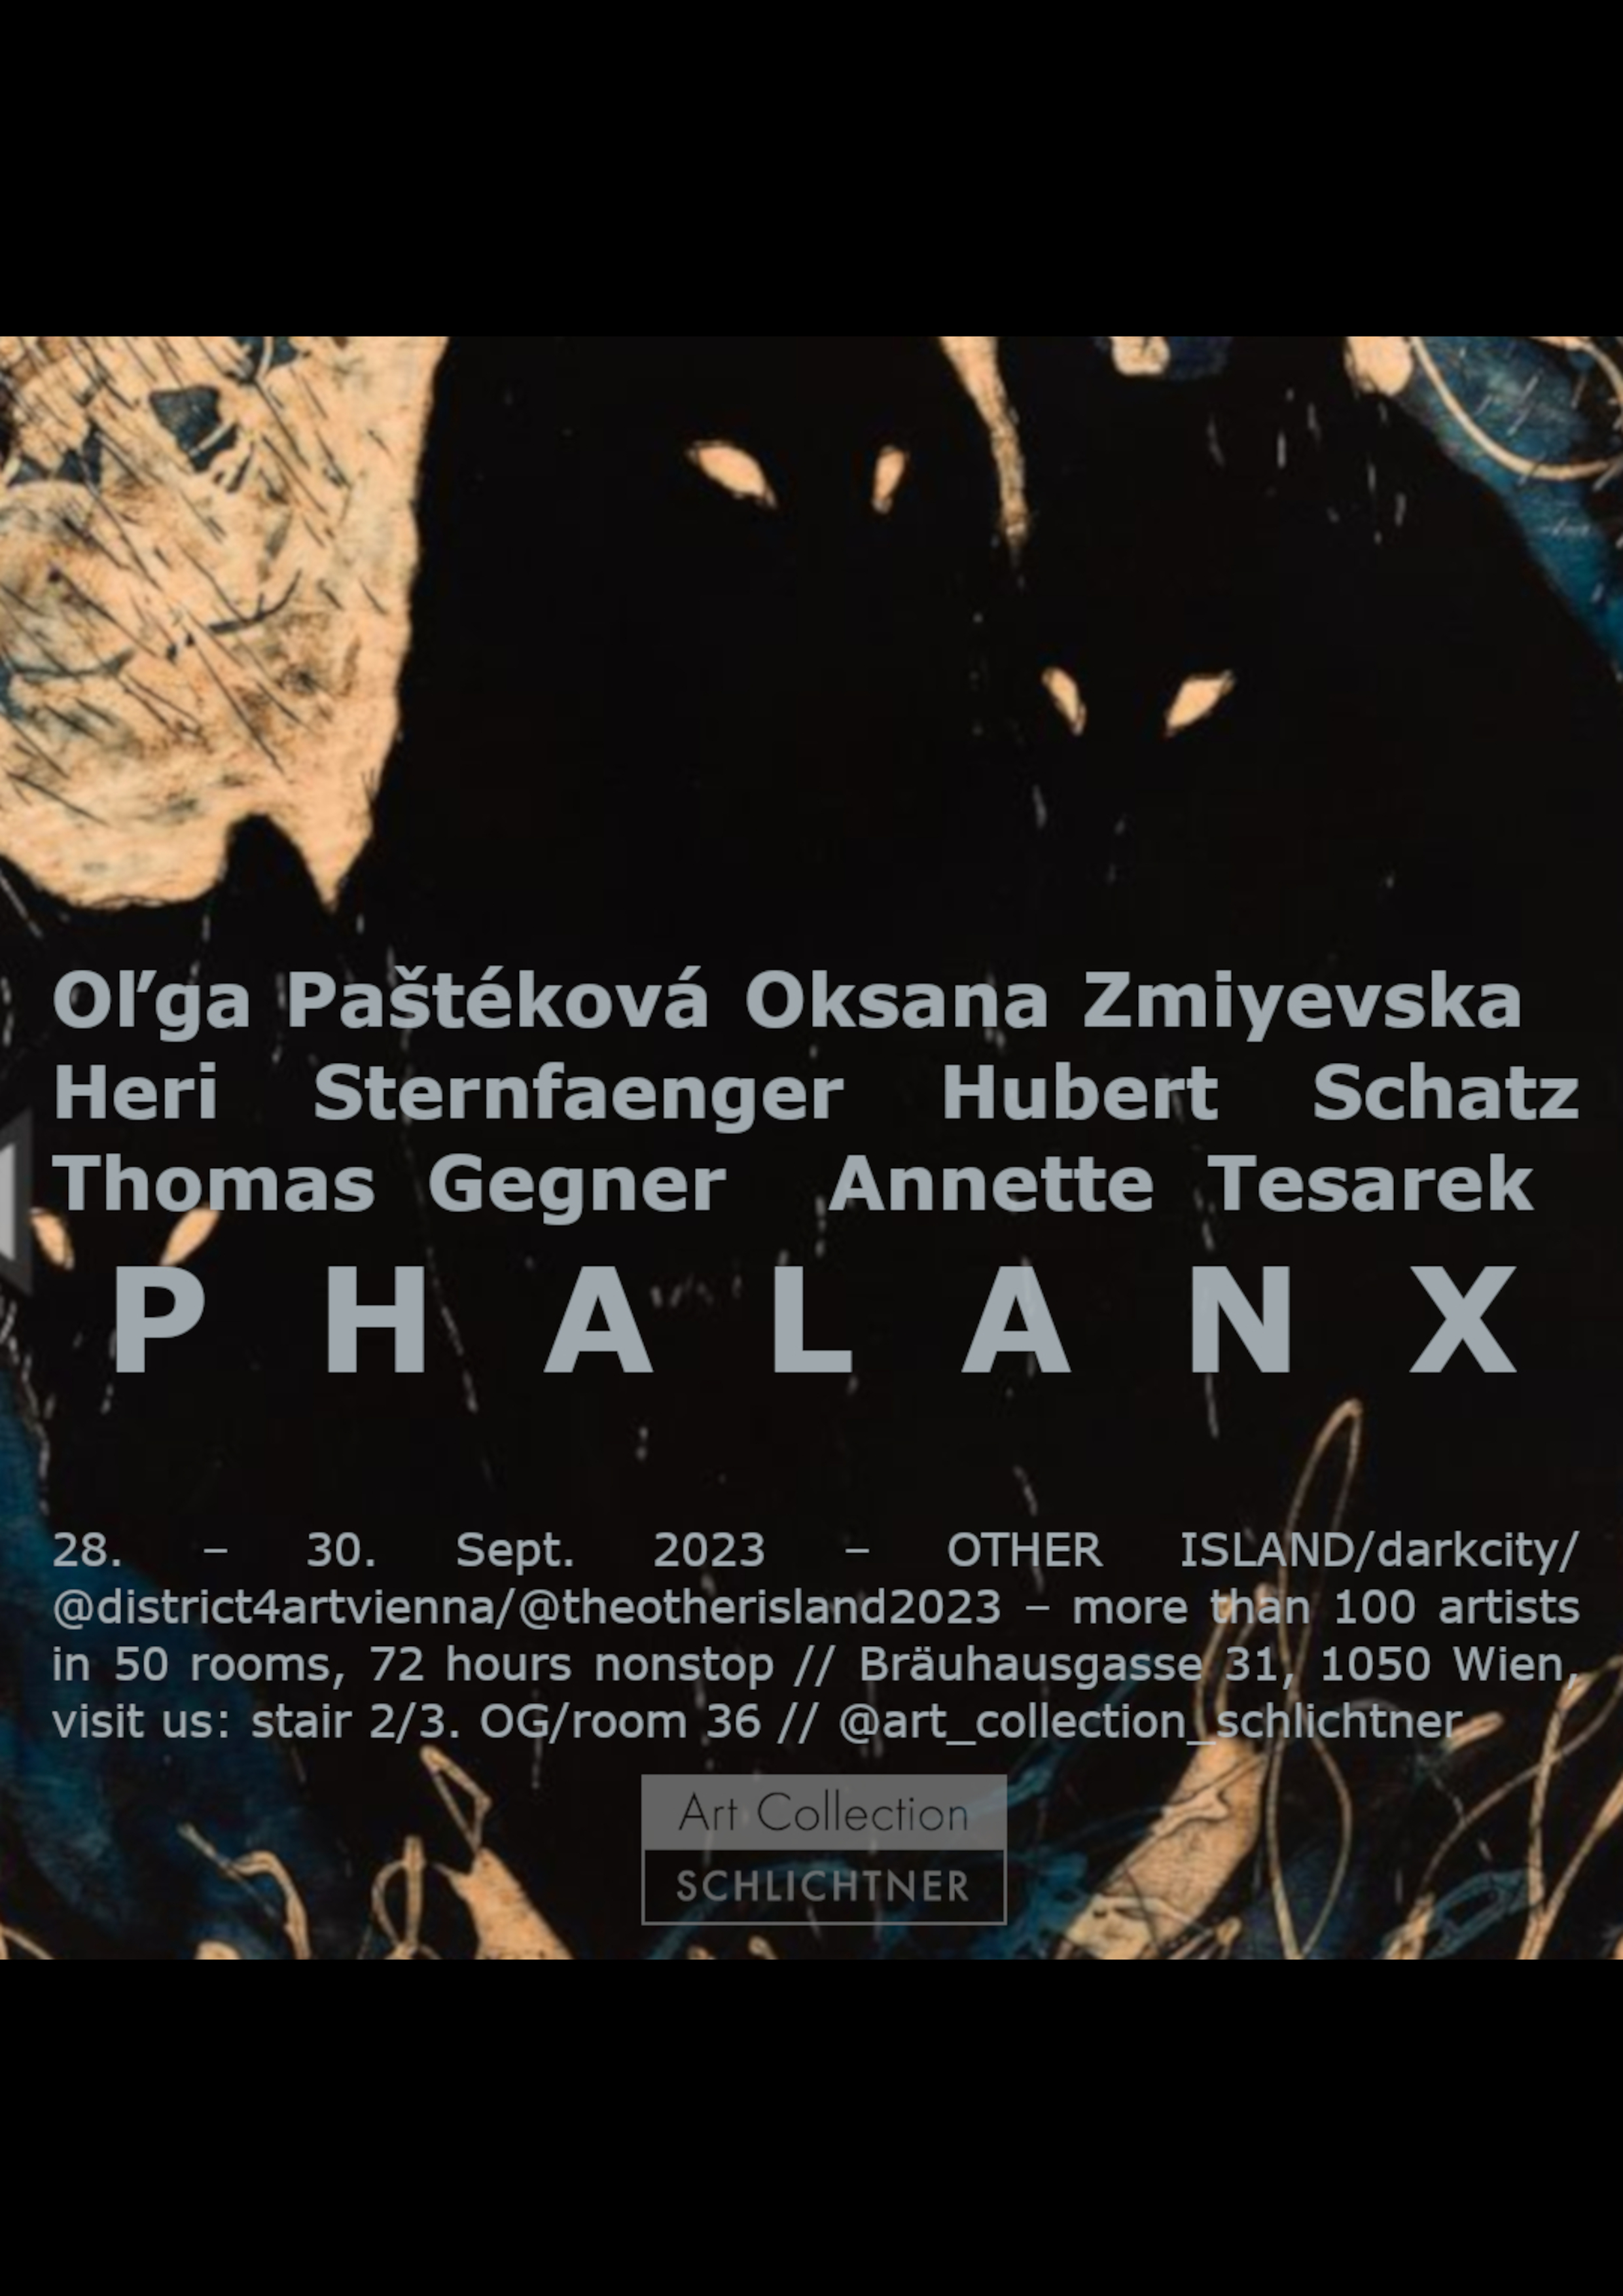 PHALANX – The Other Side (nach Alfred Kubin) - 28.9.2023 - 30.9.2023 @THEOTHERISLAND2023